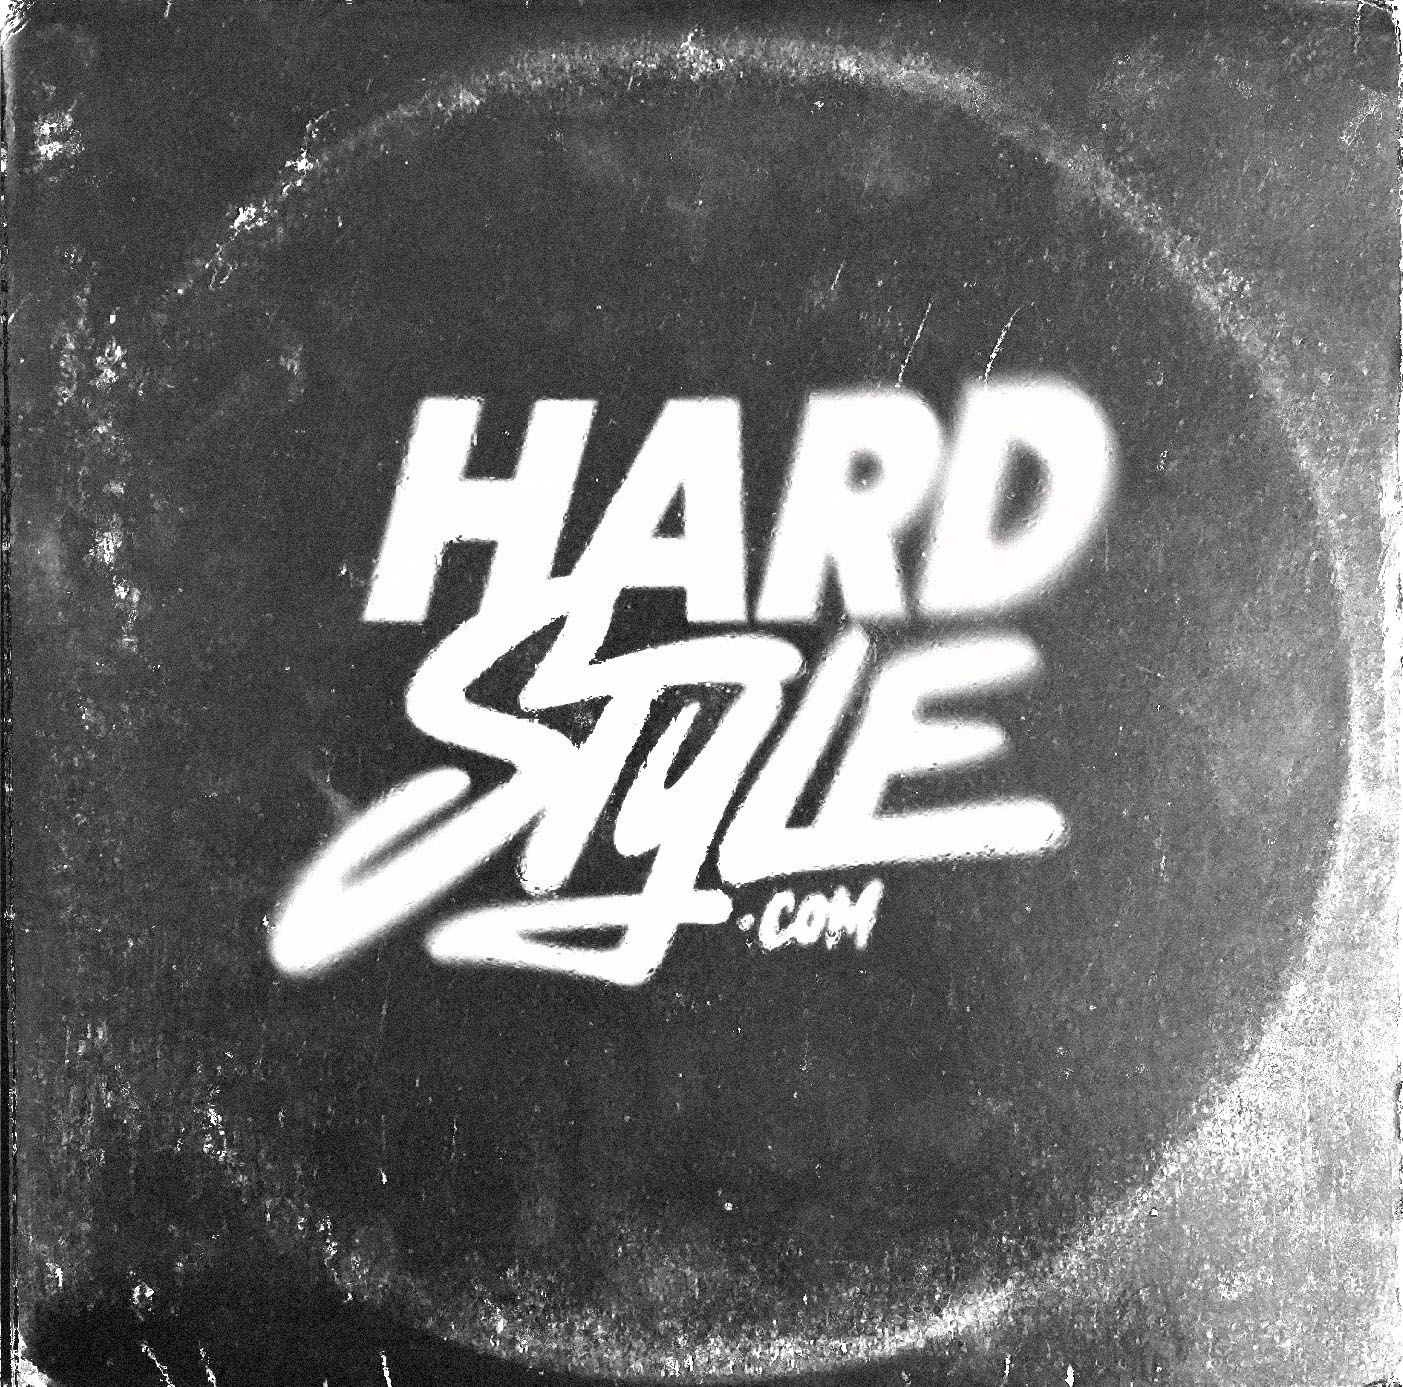 Hard House Music Volume 3